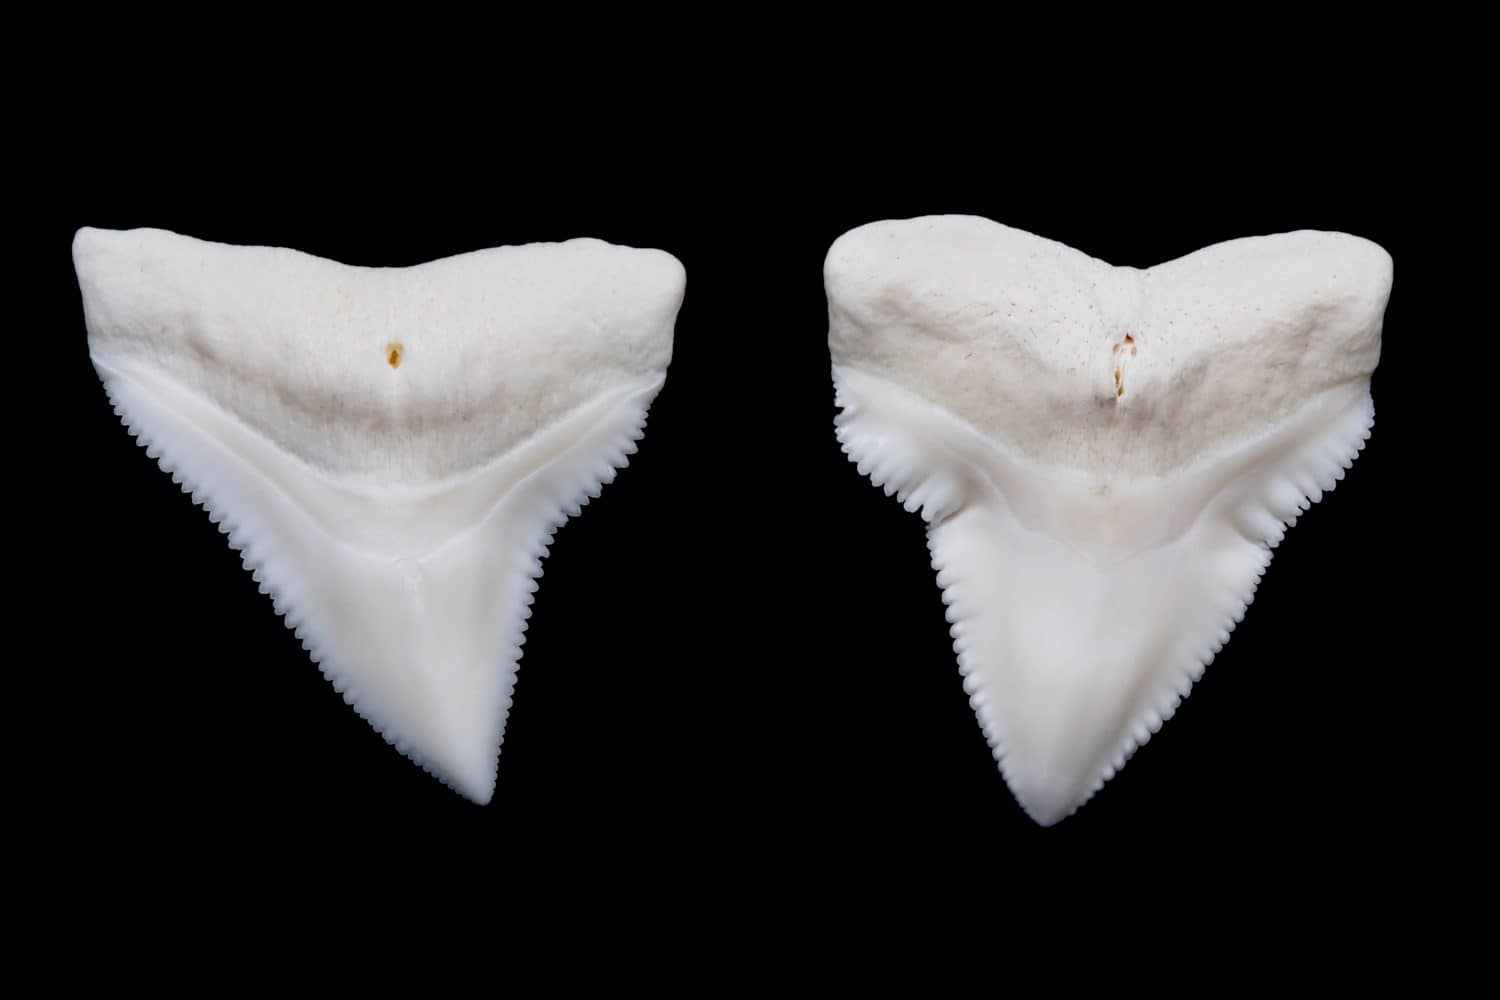 Two Modern Bull Shark Teeth (Regular and Pathological)